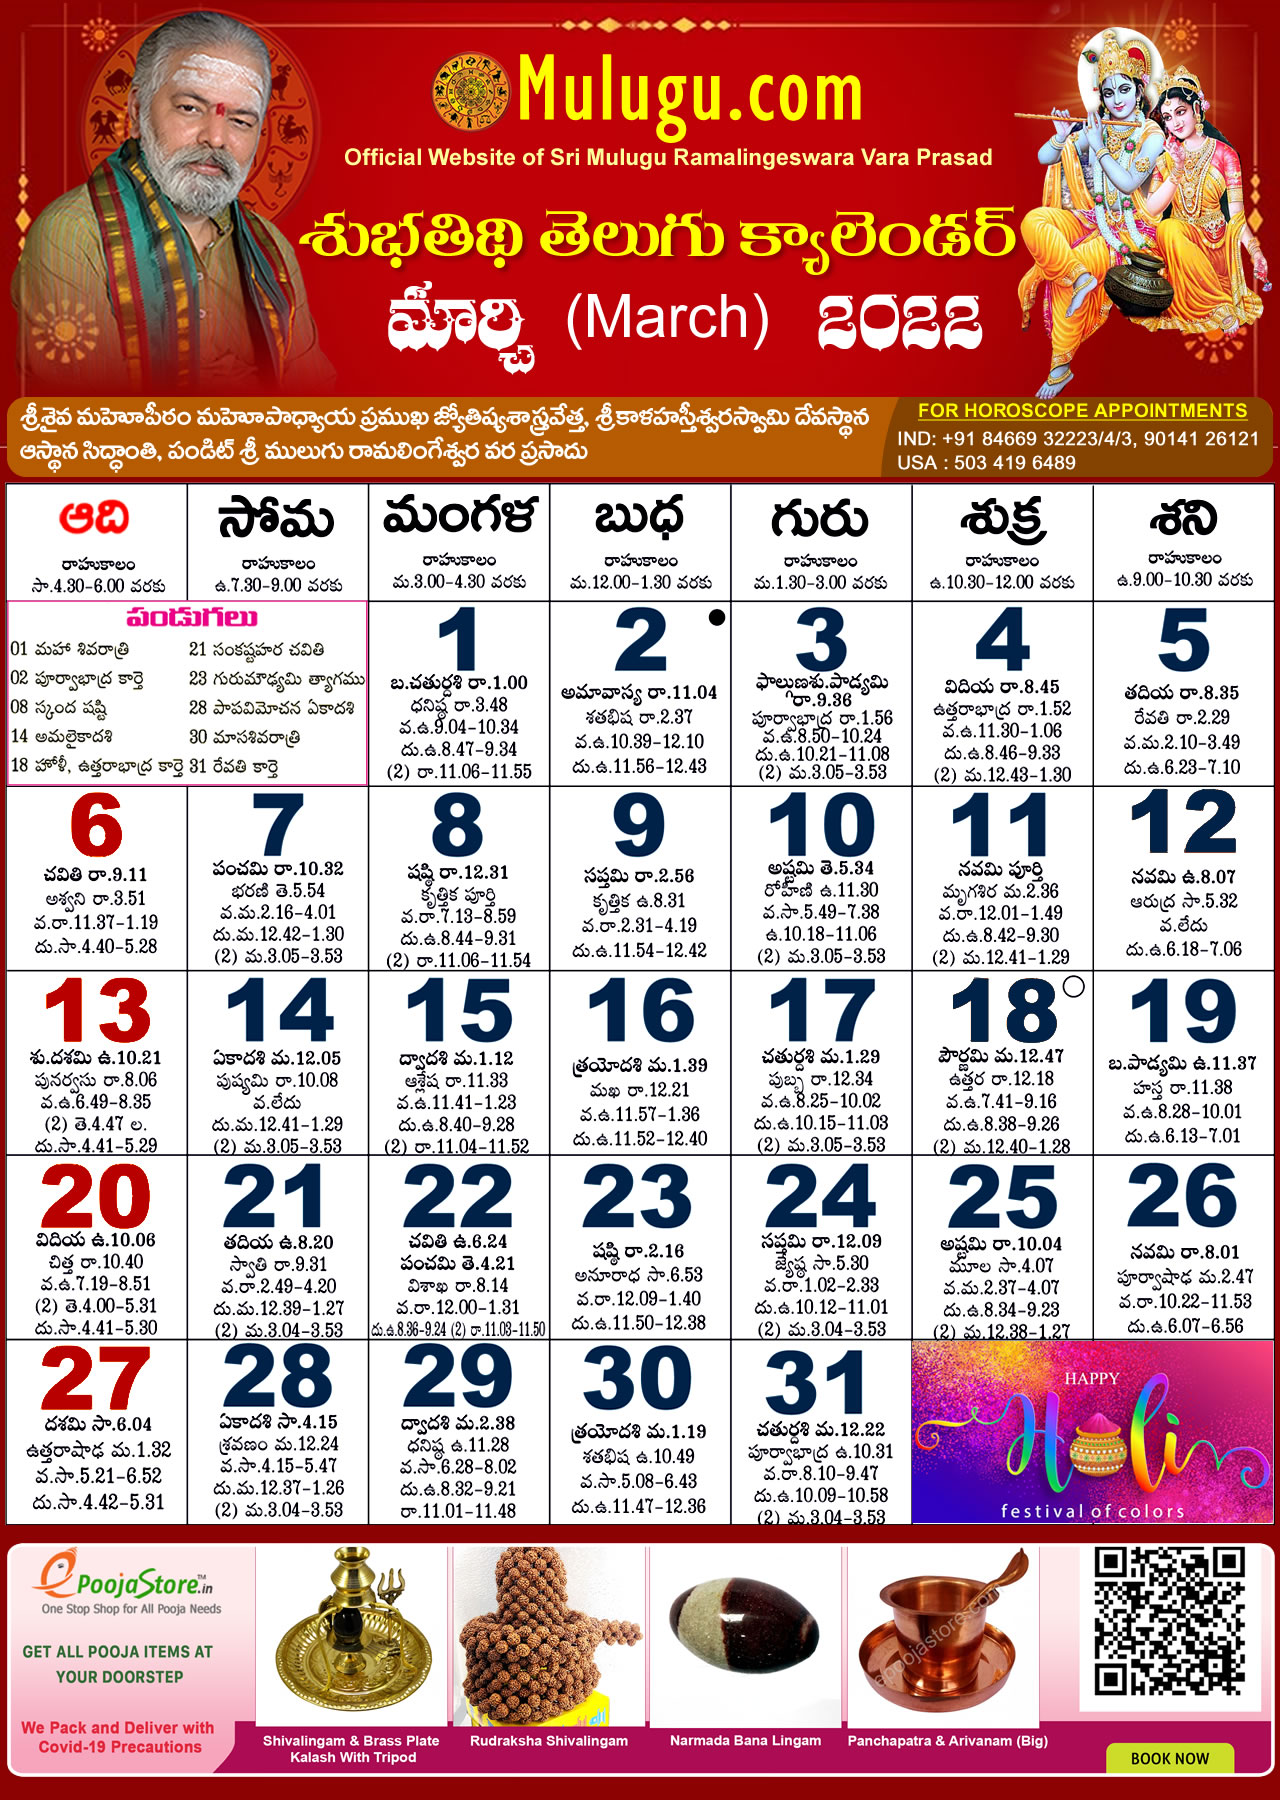 Telugu Calendar 2022 Subhathidi March Telugu Calendar 2022 | Telugu Calendar 2022 - 2023 | Telugu  Subhathidi Calendar 2022 | Calendar 2022 | Telugu Calendar 2022 |  Subhathidi Calendar 2022 | Chicago Calendar 2022 |